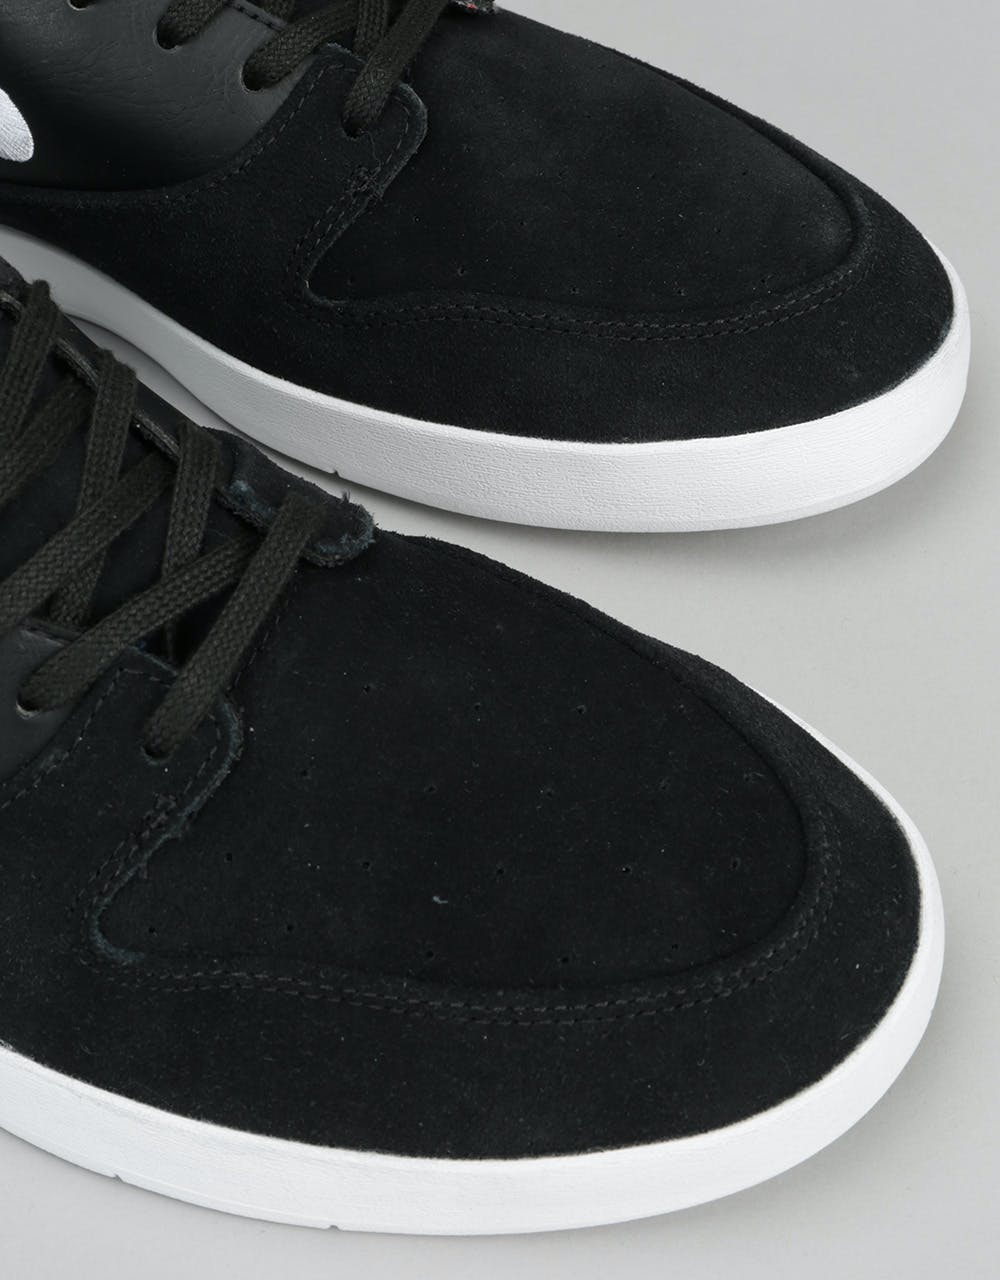 Nike SB Paul Rodriguez X Skate Shoes - Black/White